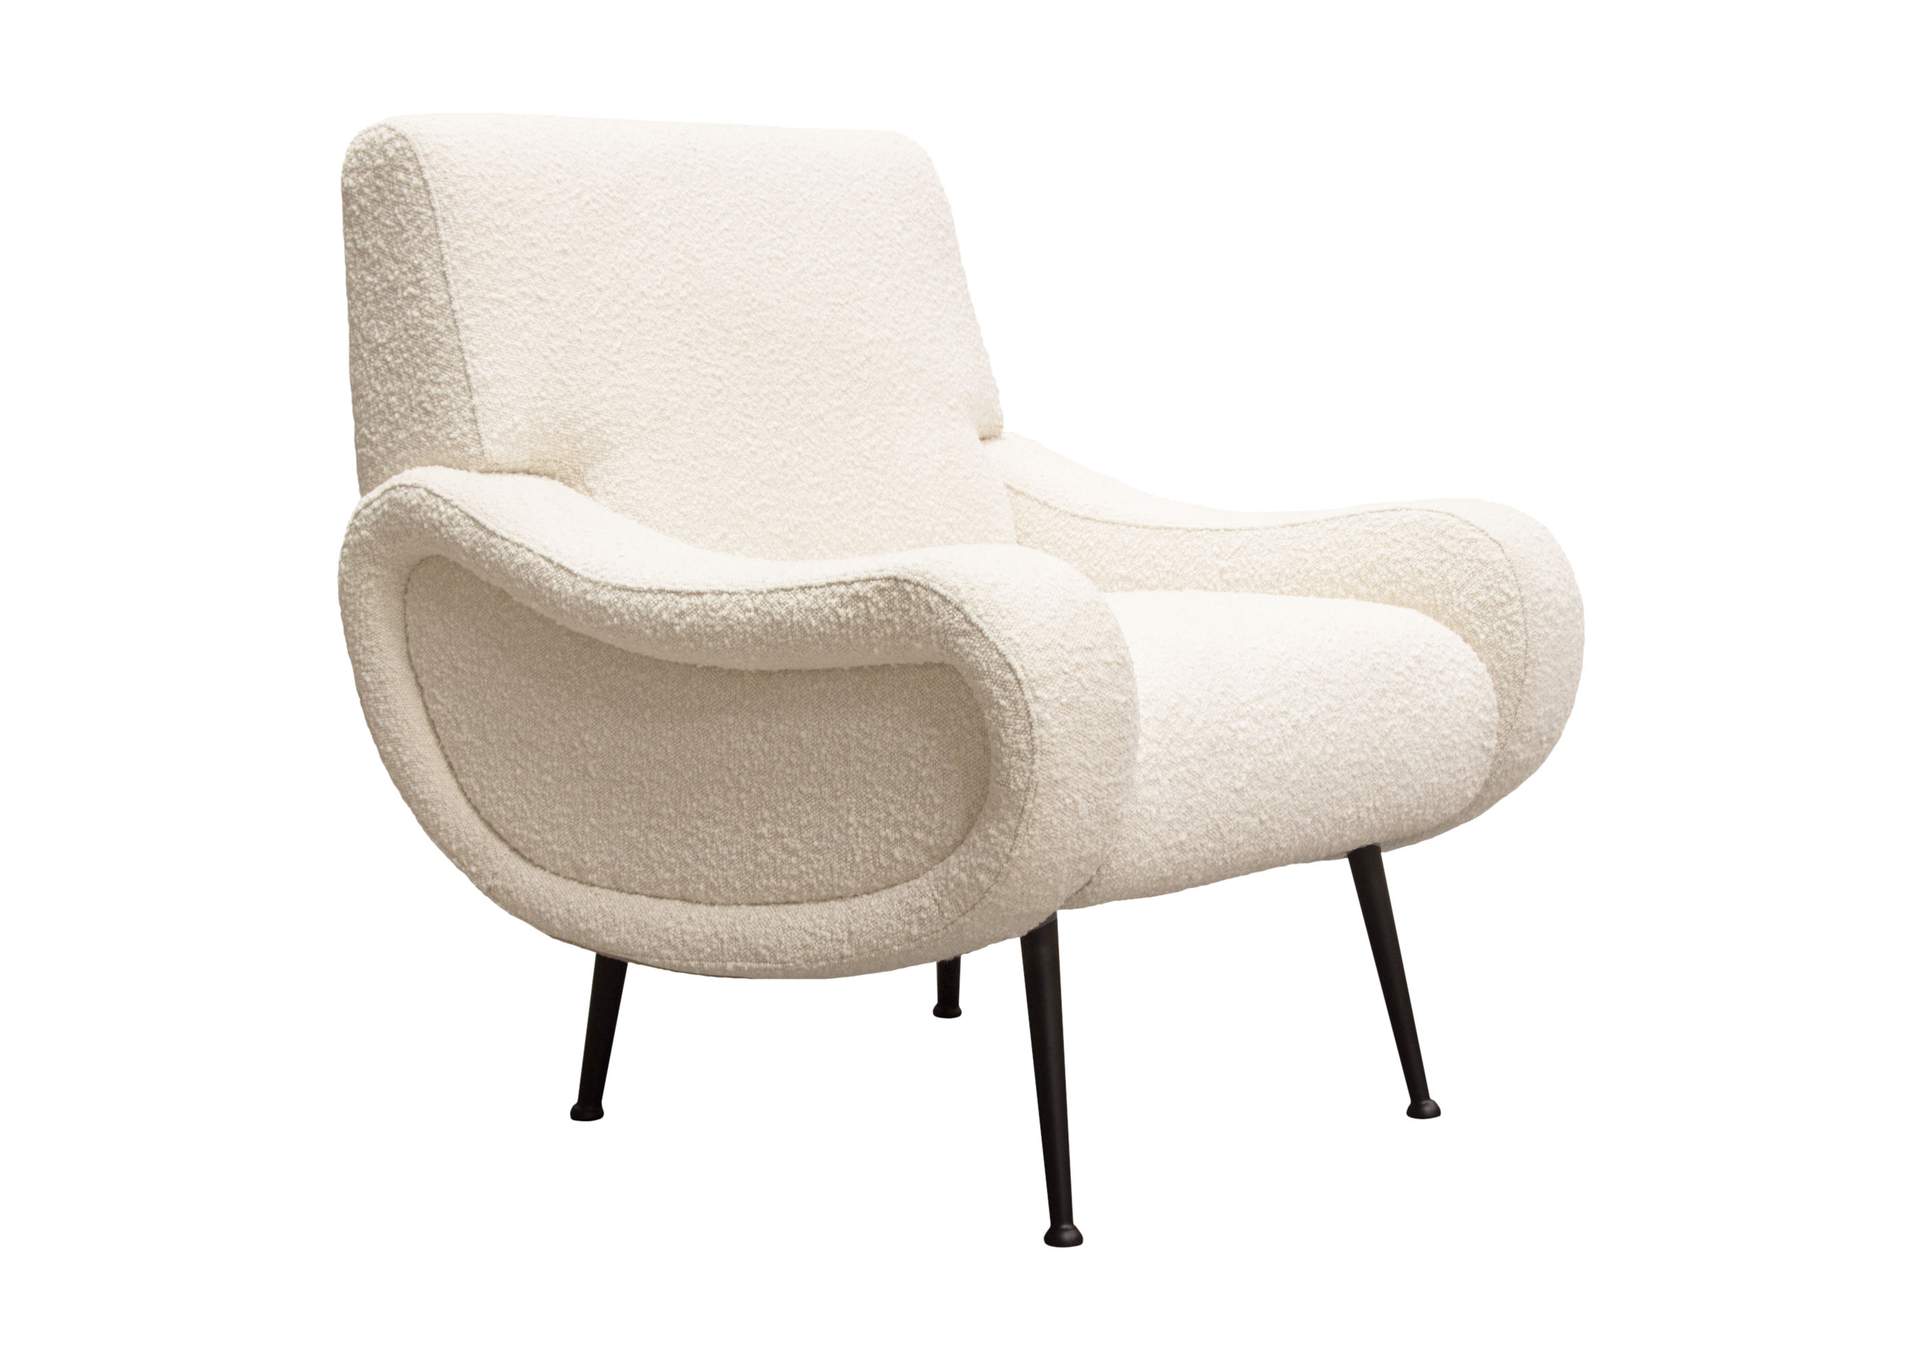 Cameron Accent Chair in Bone Boucle Textured Fabric w/ Black Leg by Diamond Sofa,Diamond Sofa